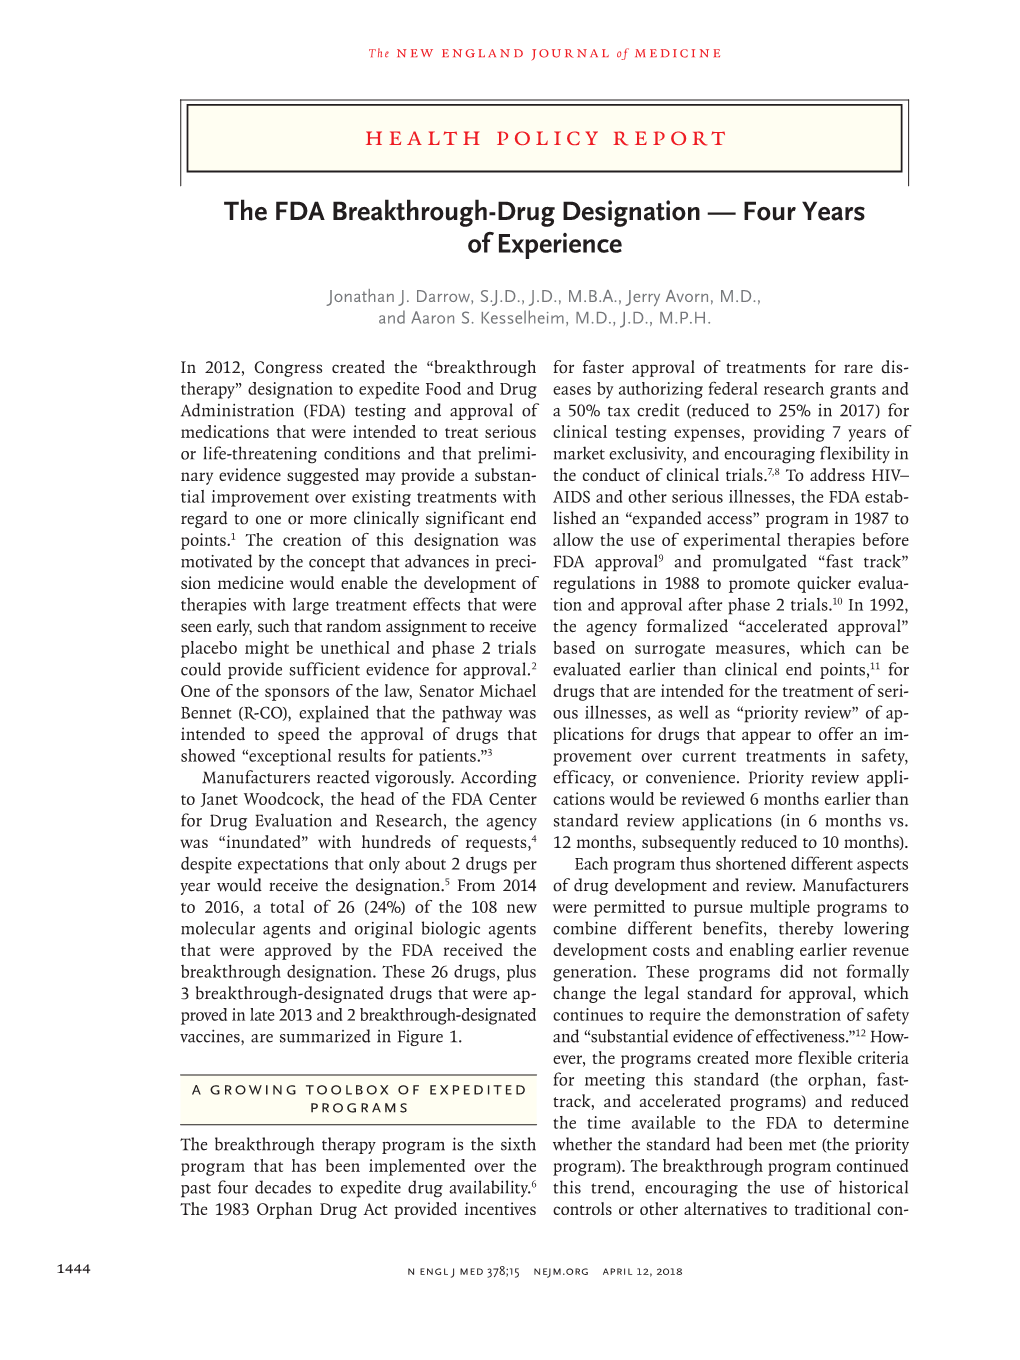 The FDA Breakthrough-Drug Designation — Four Years of Experience